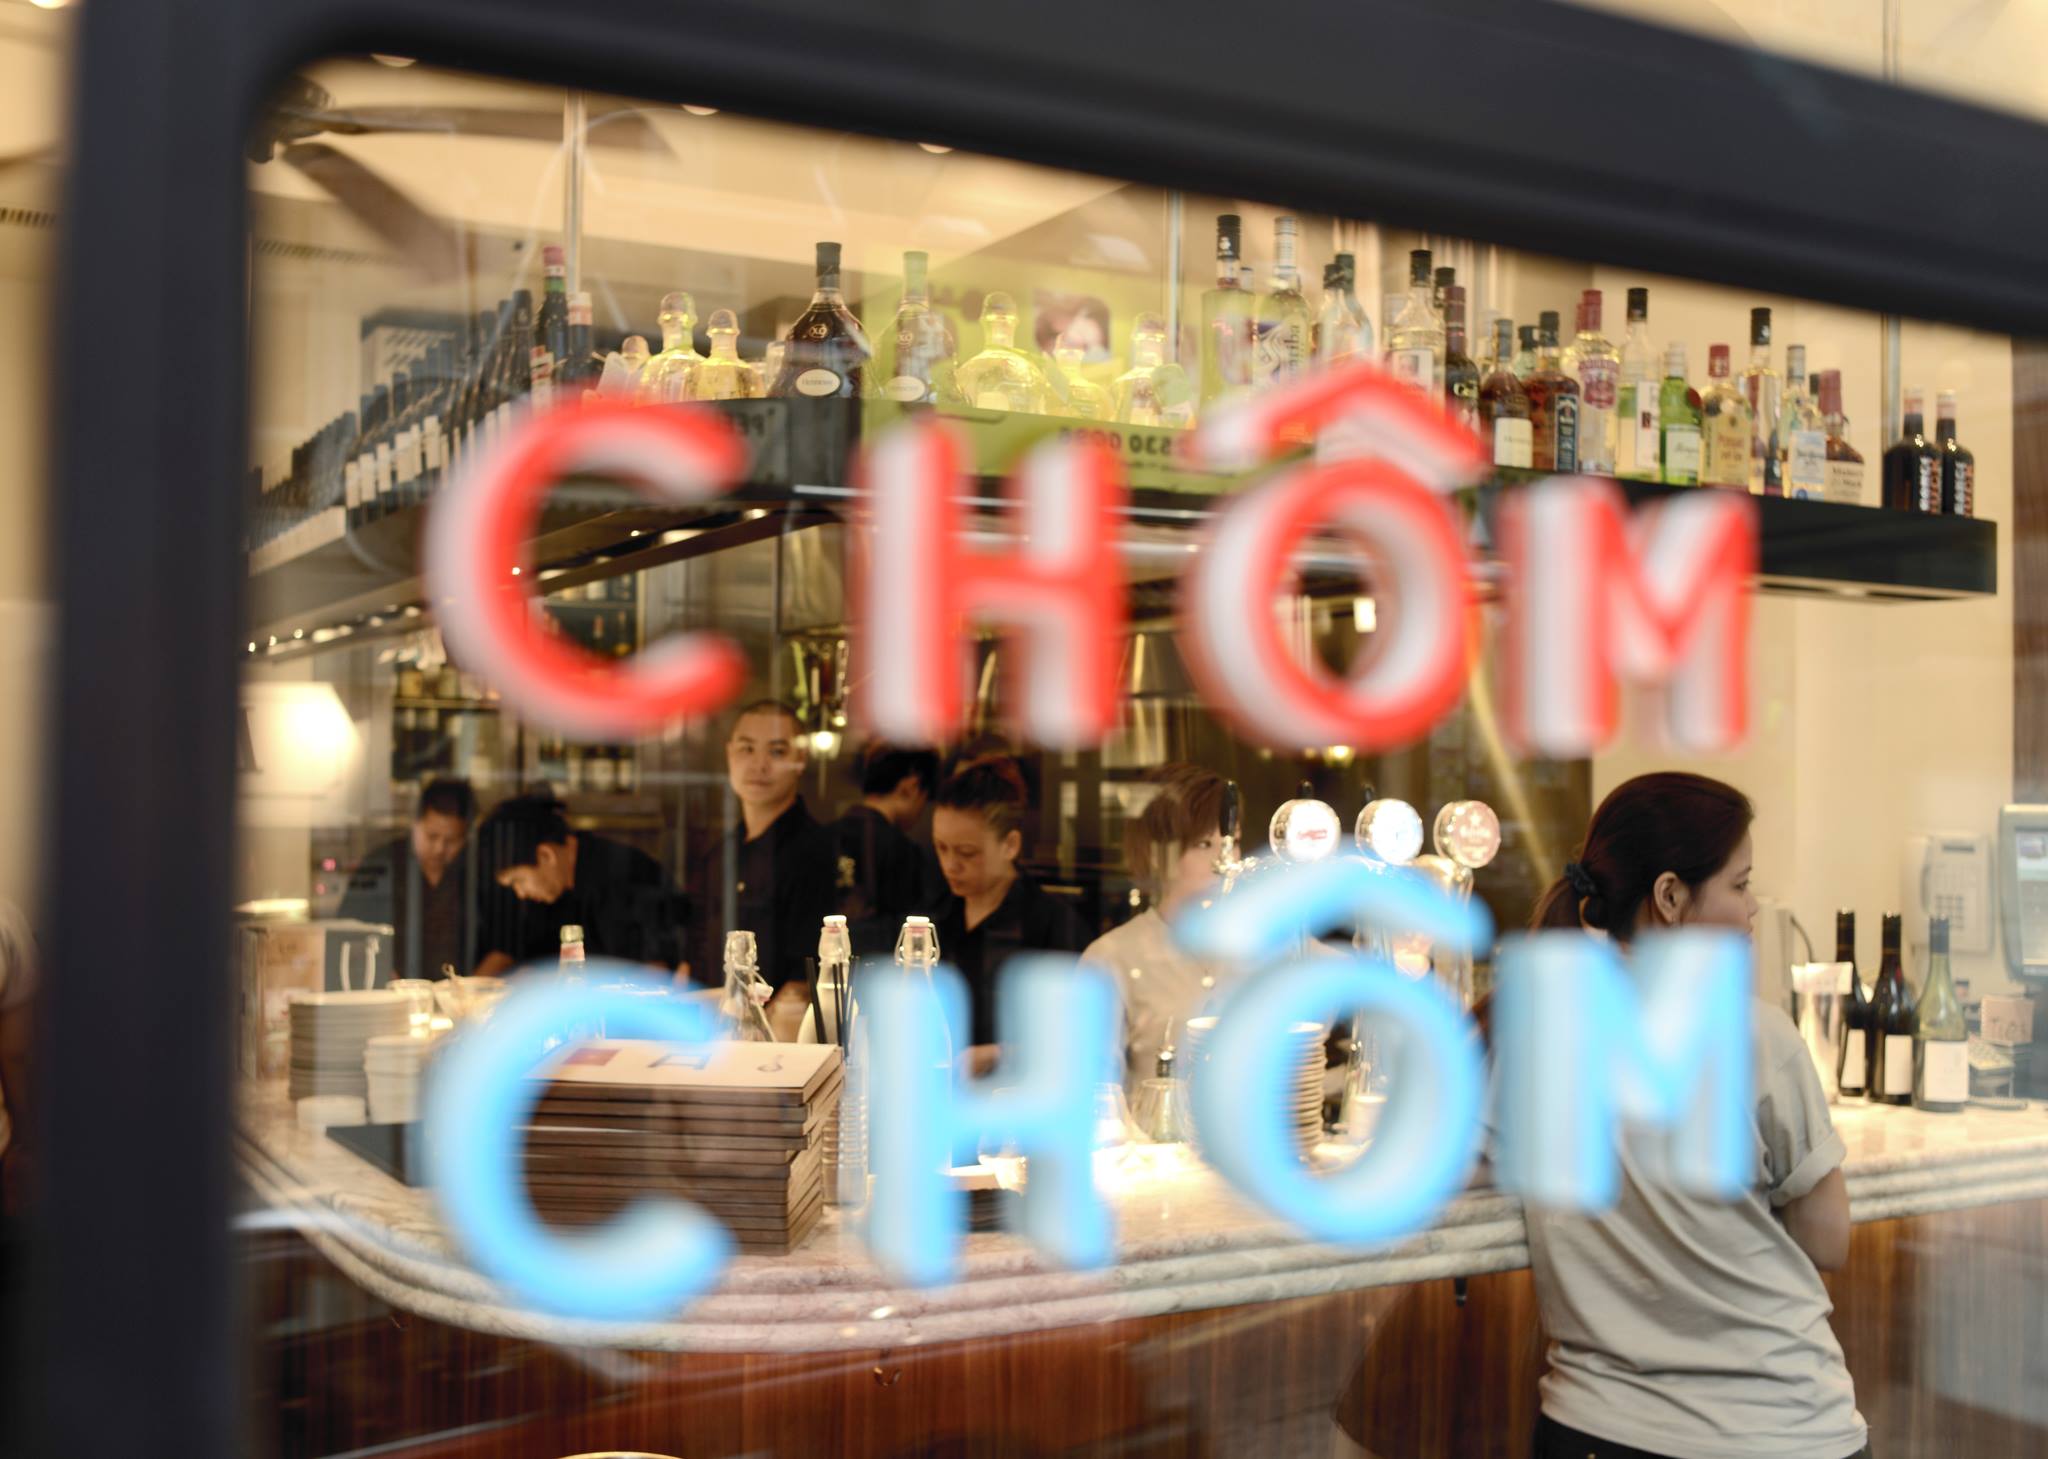 CHOMCHOM Hong Kong restaurant interior design sean dix